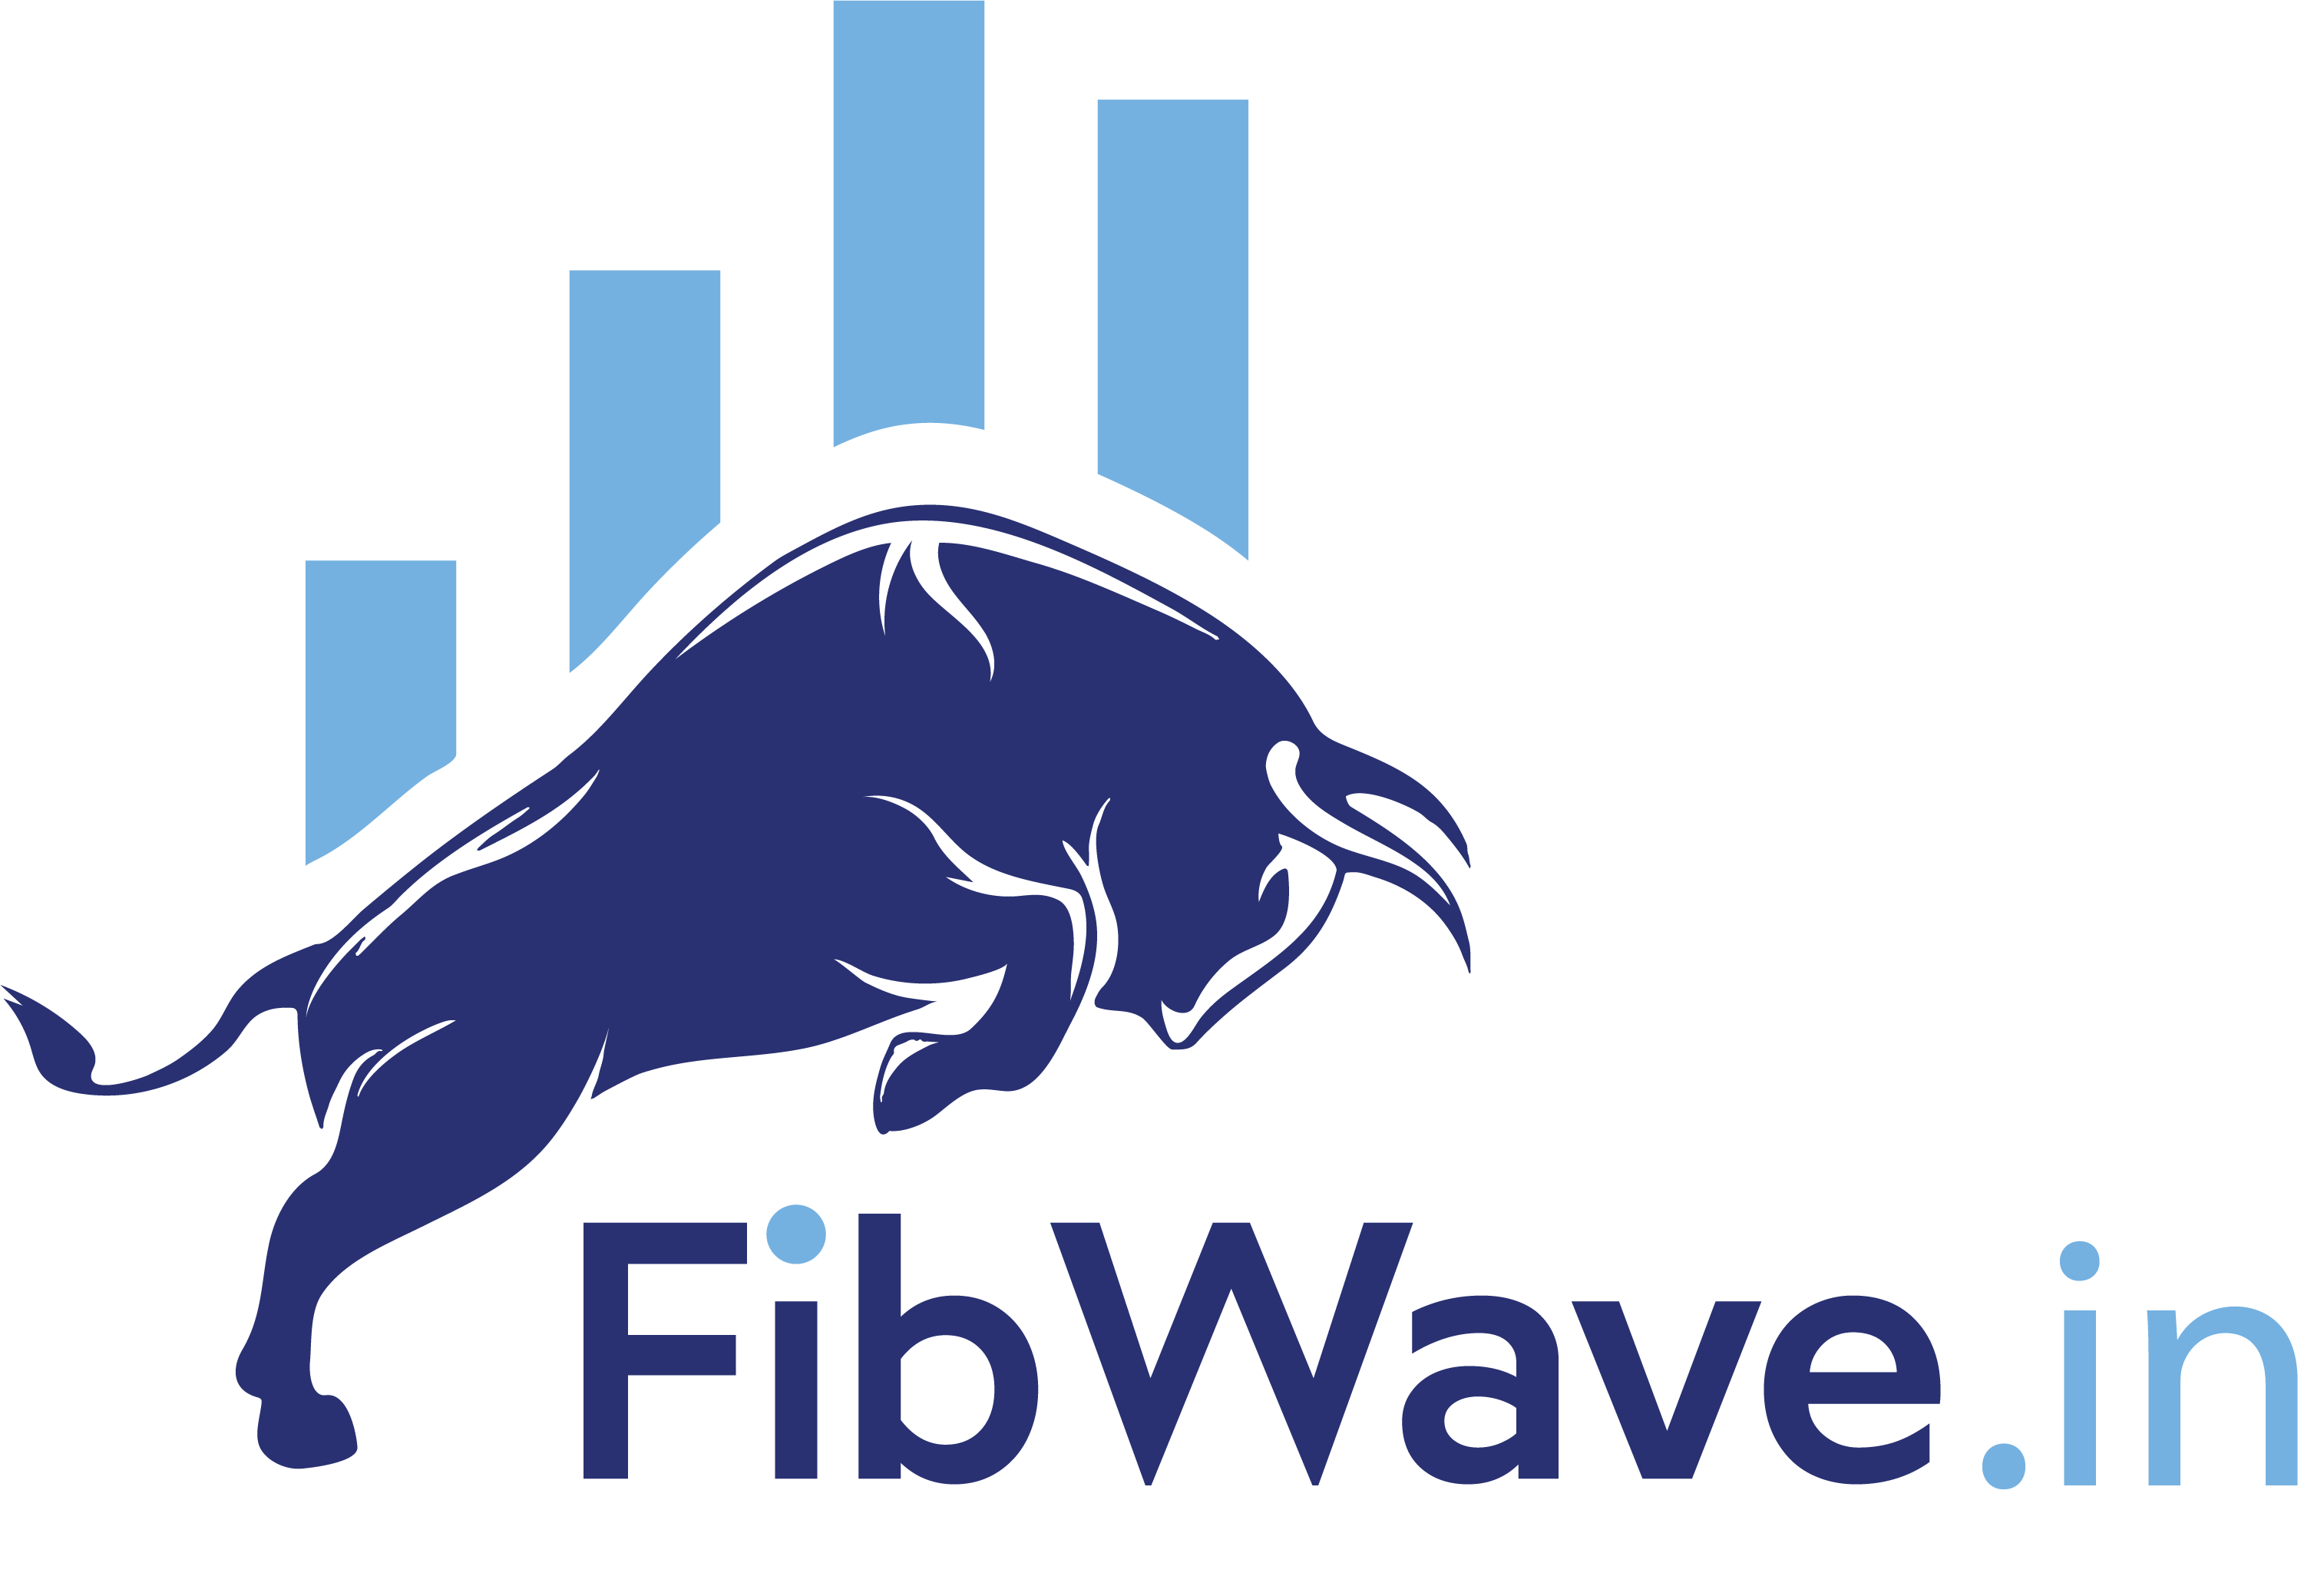 Fibwave